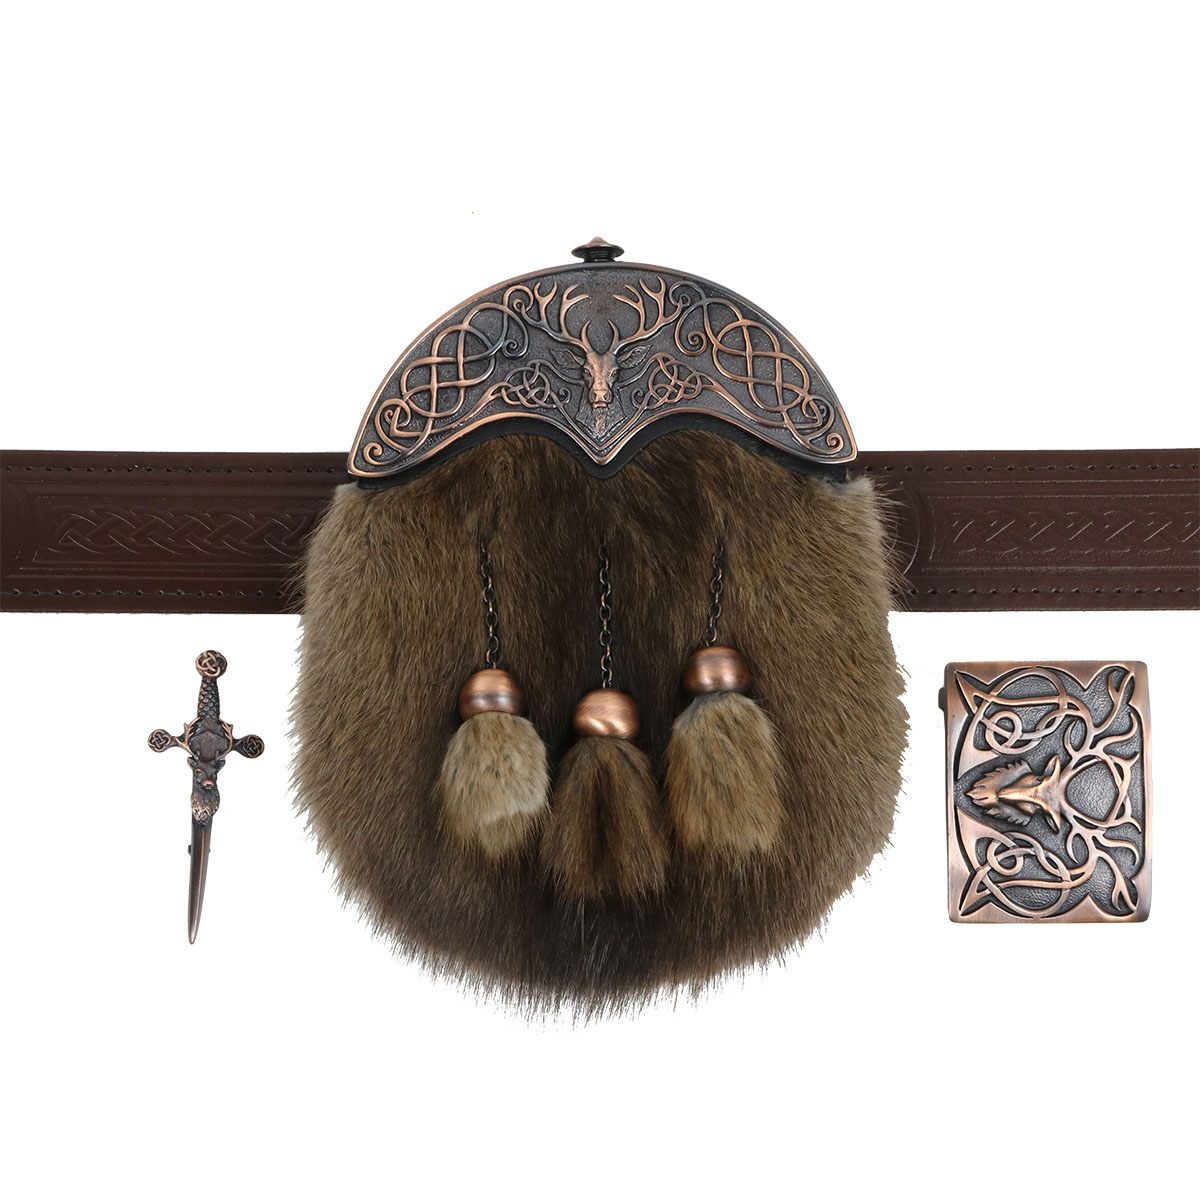 The Celtic Croft Stag's Head Kilt Pin